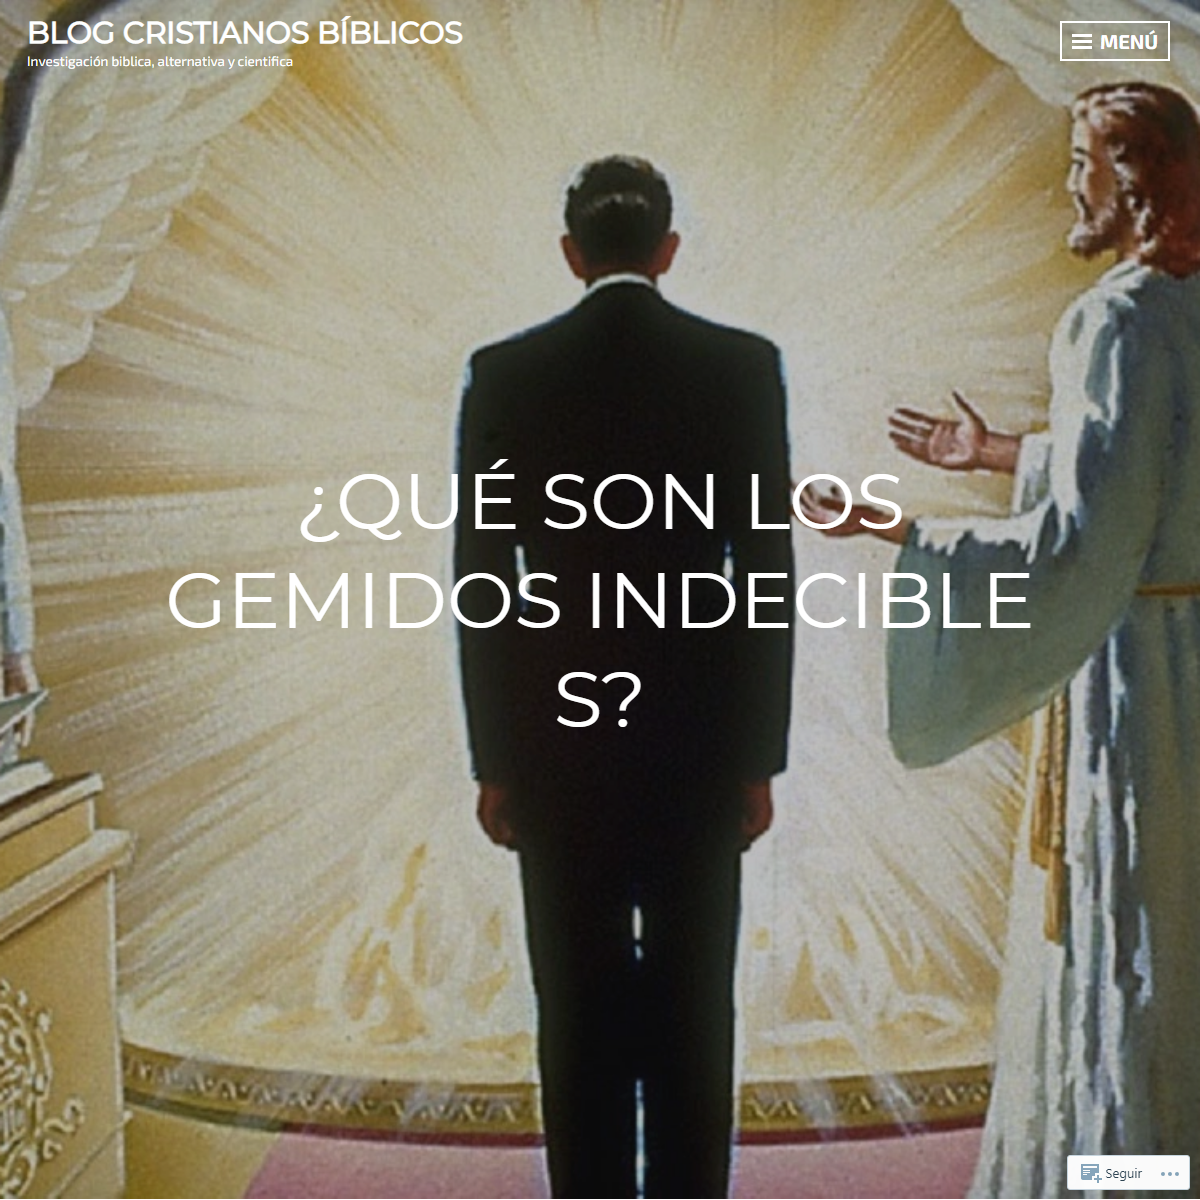 A complete backup of https://cristianosbiblicos.wordpress.com/2013/11/07/que-son-los-gemidos-indecibles/